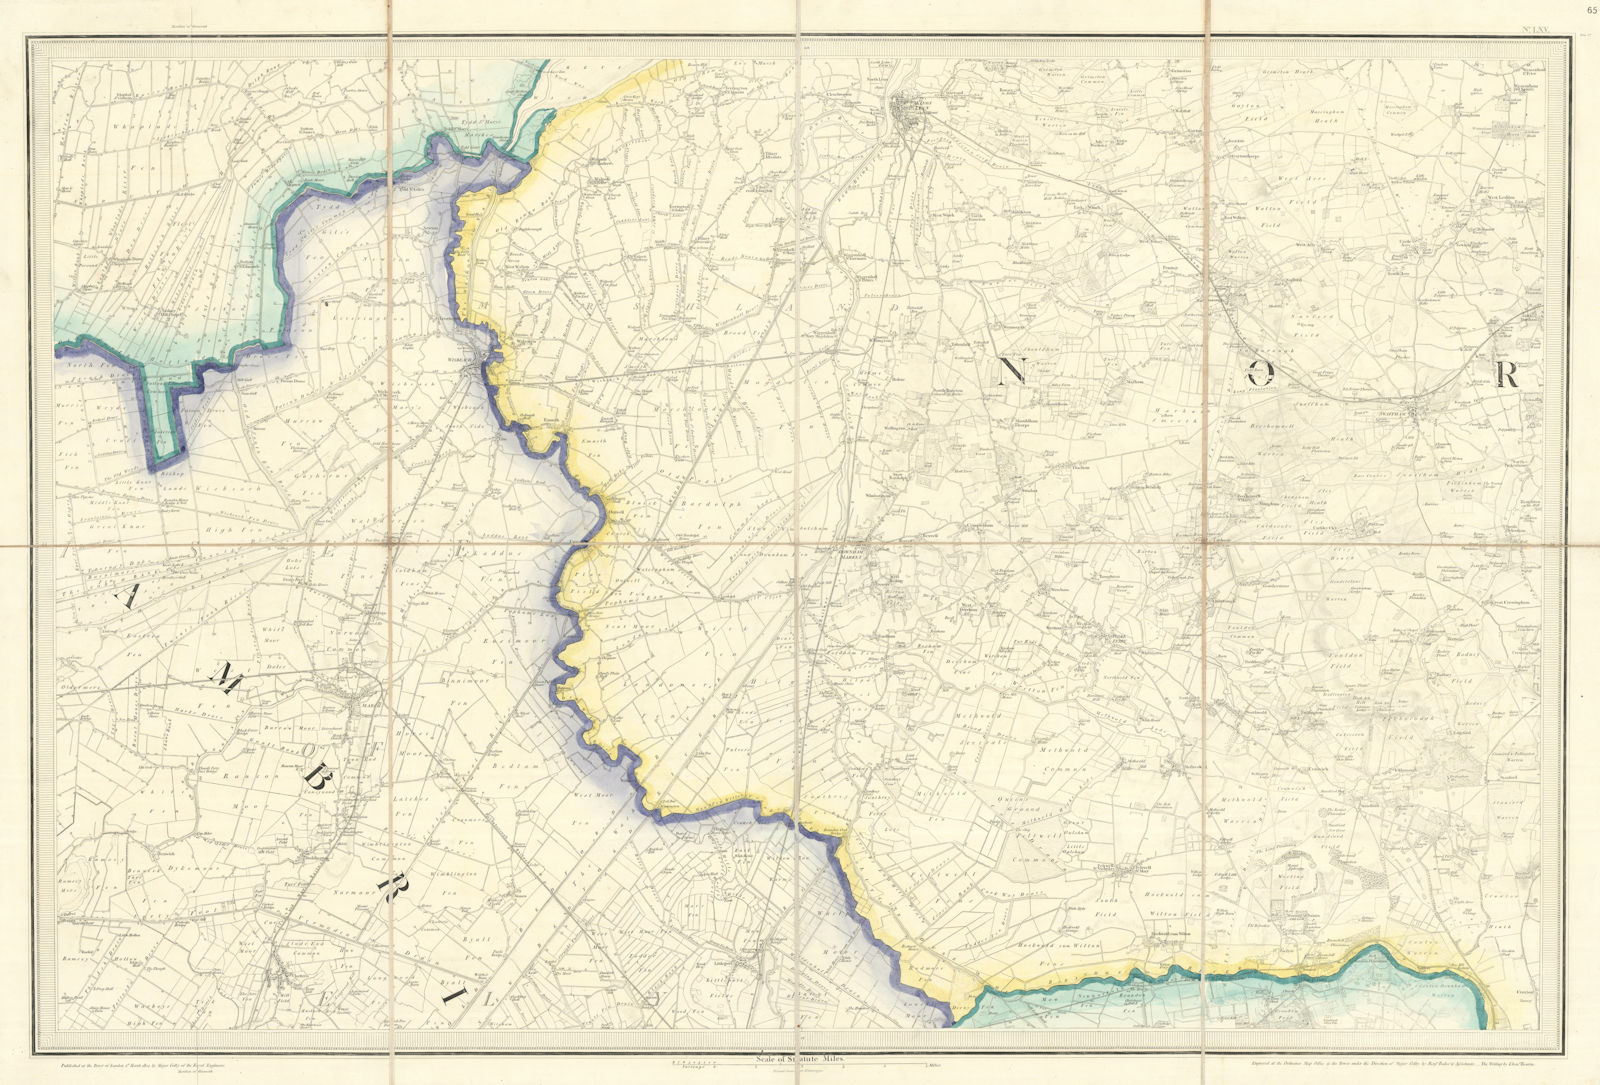 OS #65 The Fens & Brecks. King's Lynn Swaffham Norfolk Cambridgeshire 1824 map